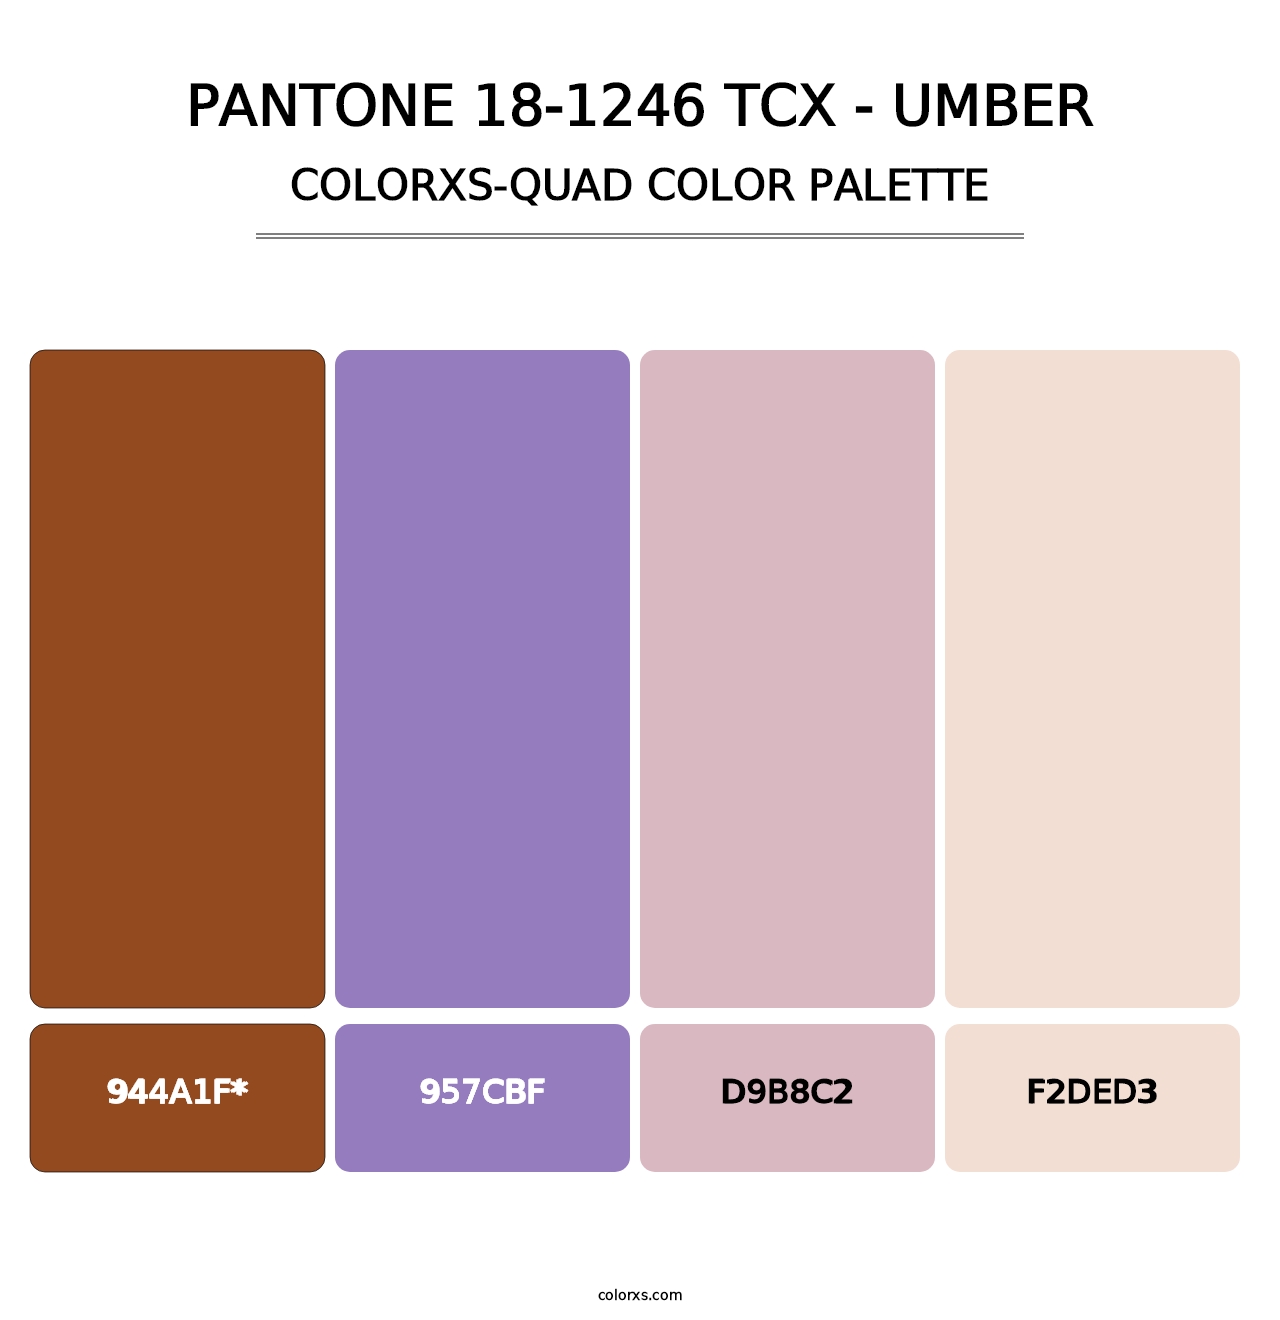 PANTONE 18-1246 TCX - Umber - Colorxs Quad Palette